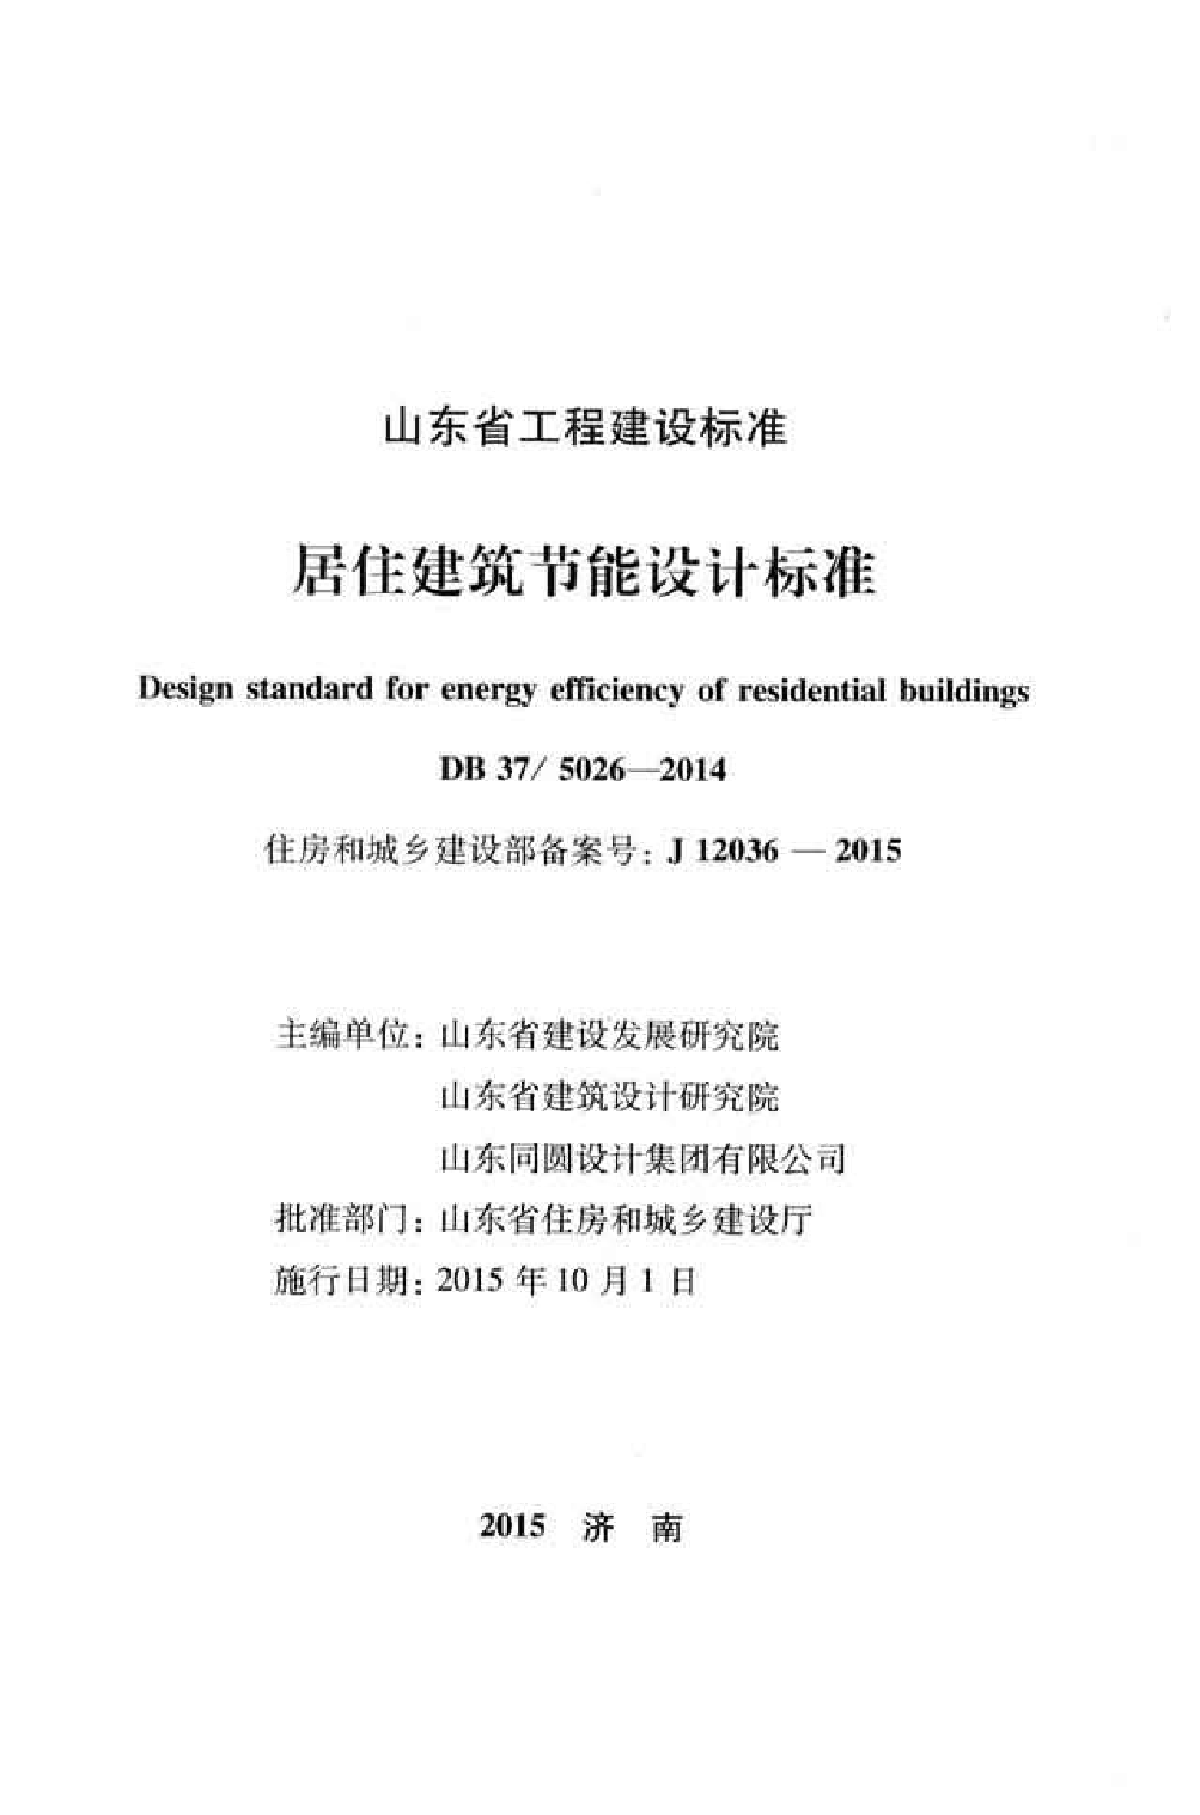 DB37 5026-2014 山东省居住建筑节能设计标准-图二